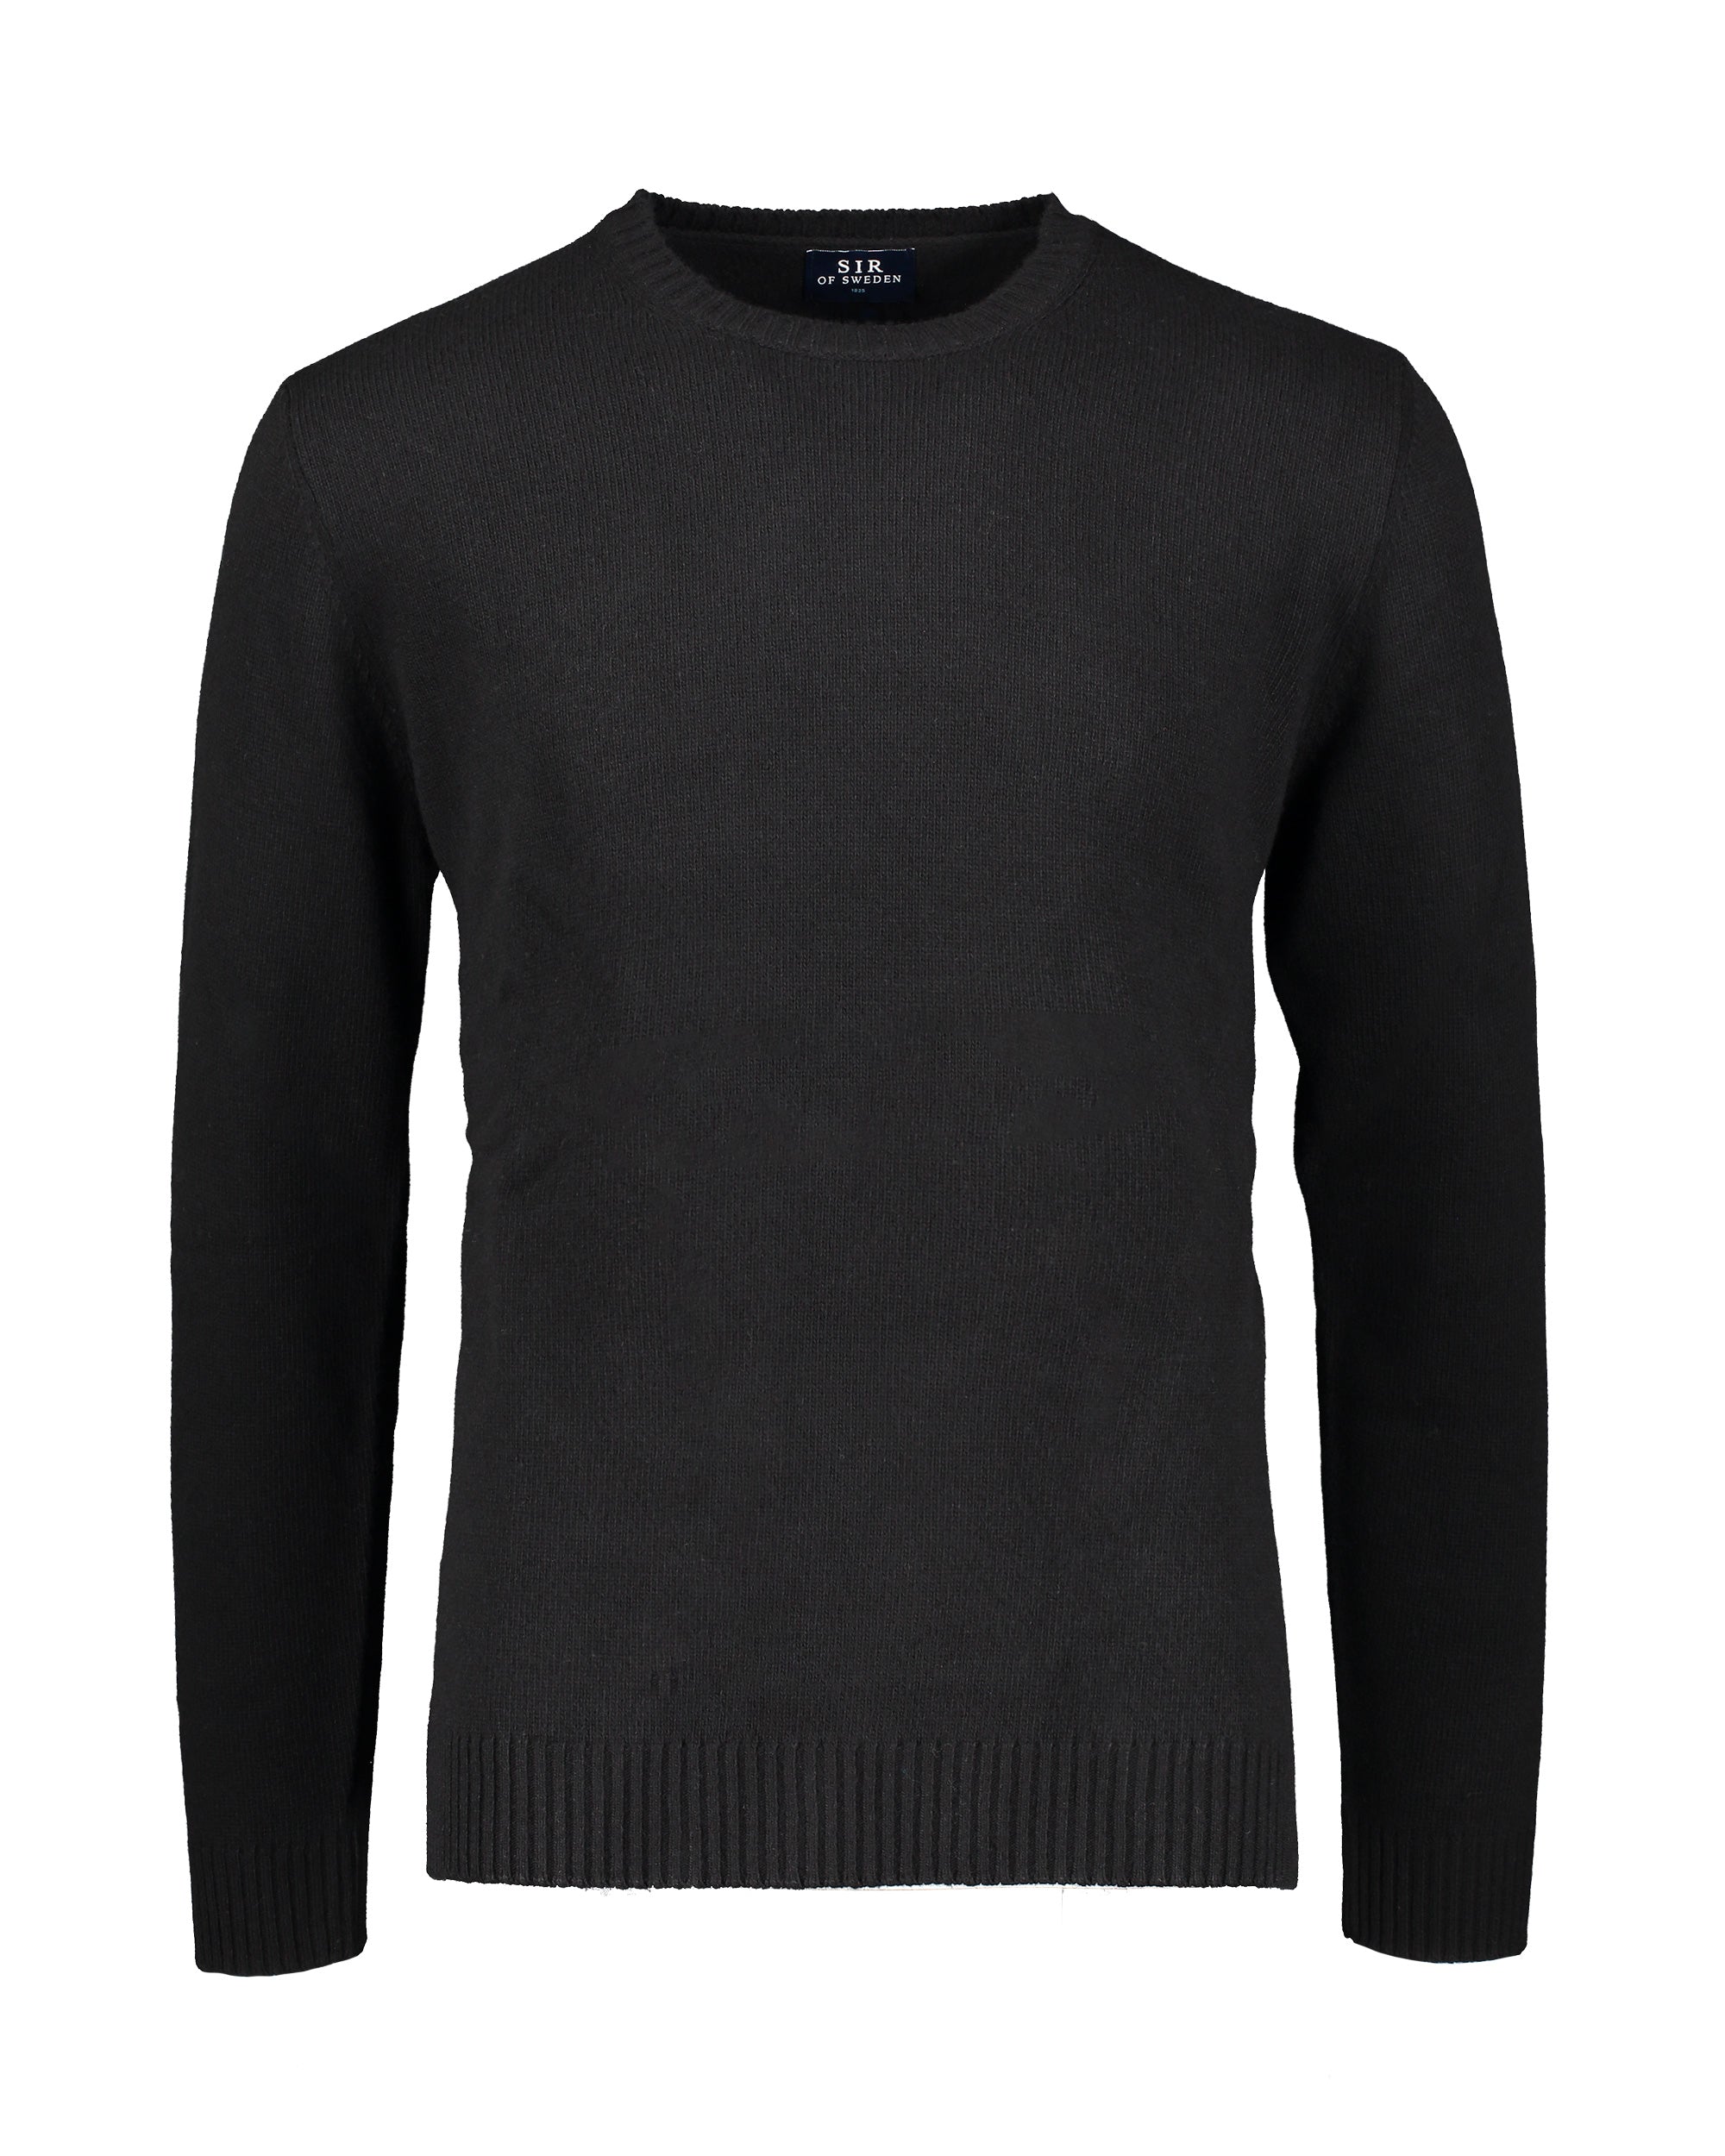 Harald Black Crewneck Sweater